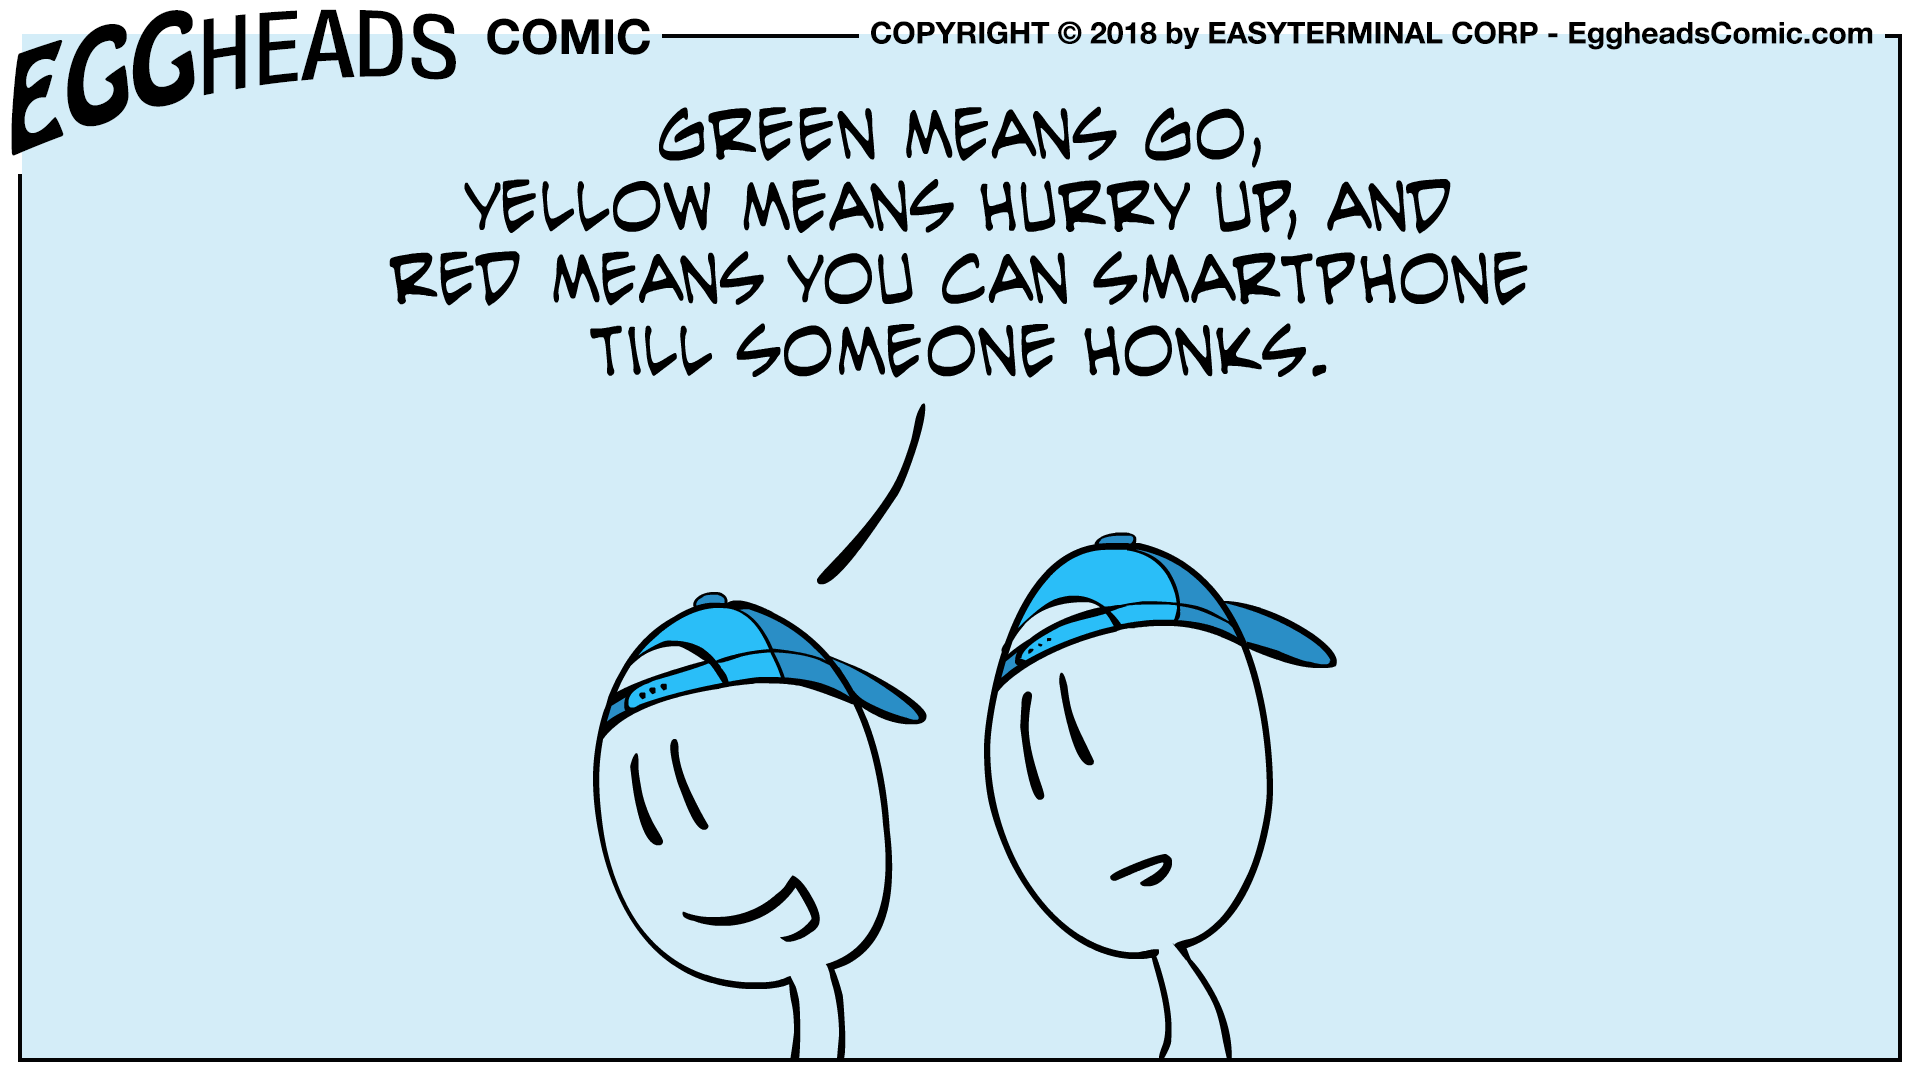 Webcomic Eggheads Comic Strip 092 Green Means Go